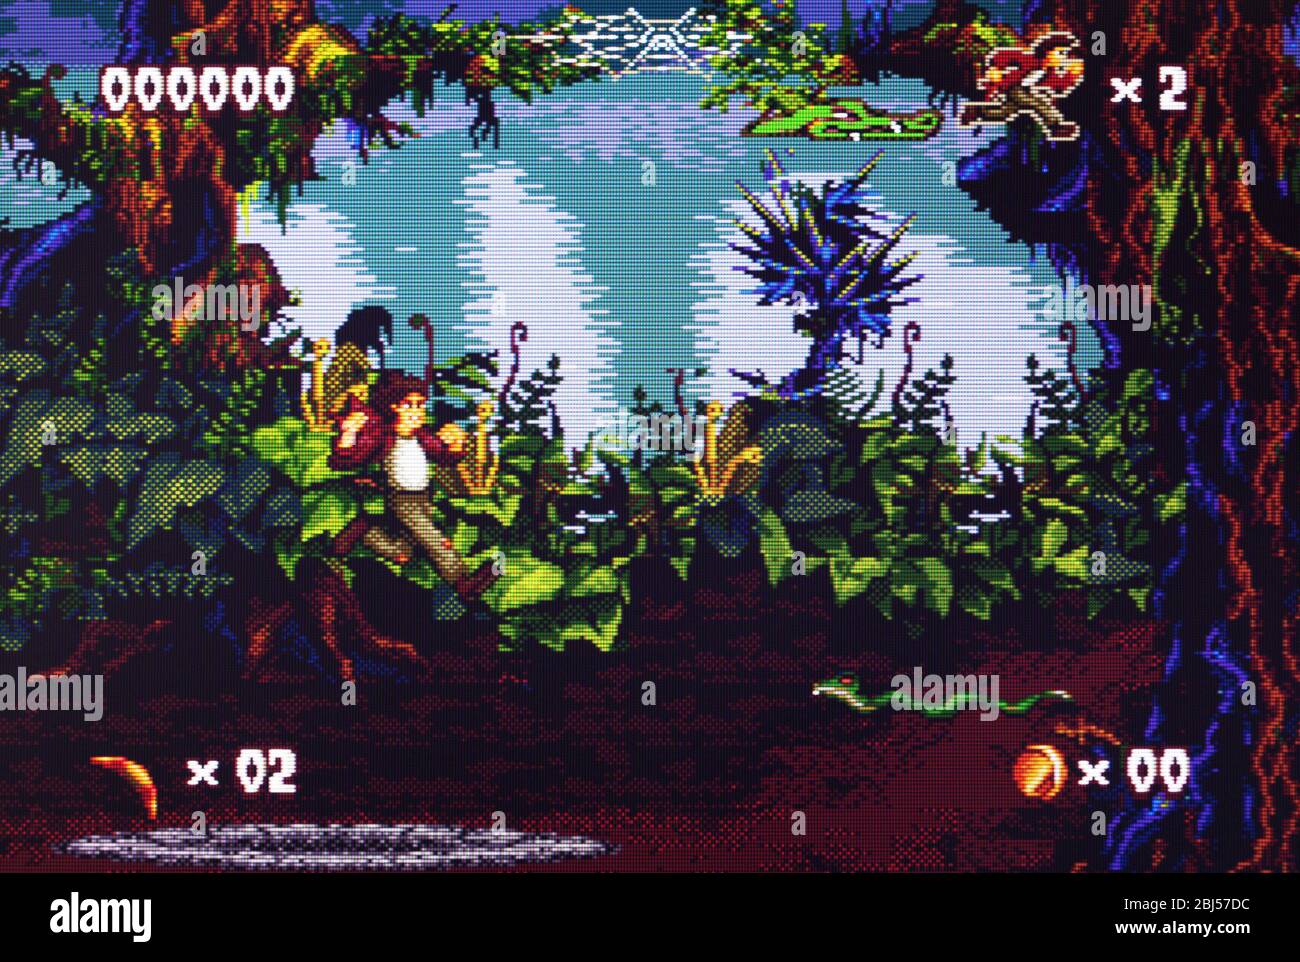 Pitfall The Mayan Adventure - Sega Genesis Mega Drive - Editorial use only Stock Photo